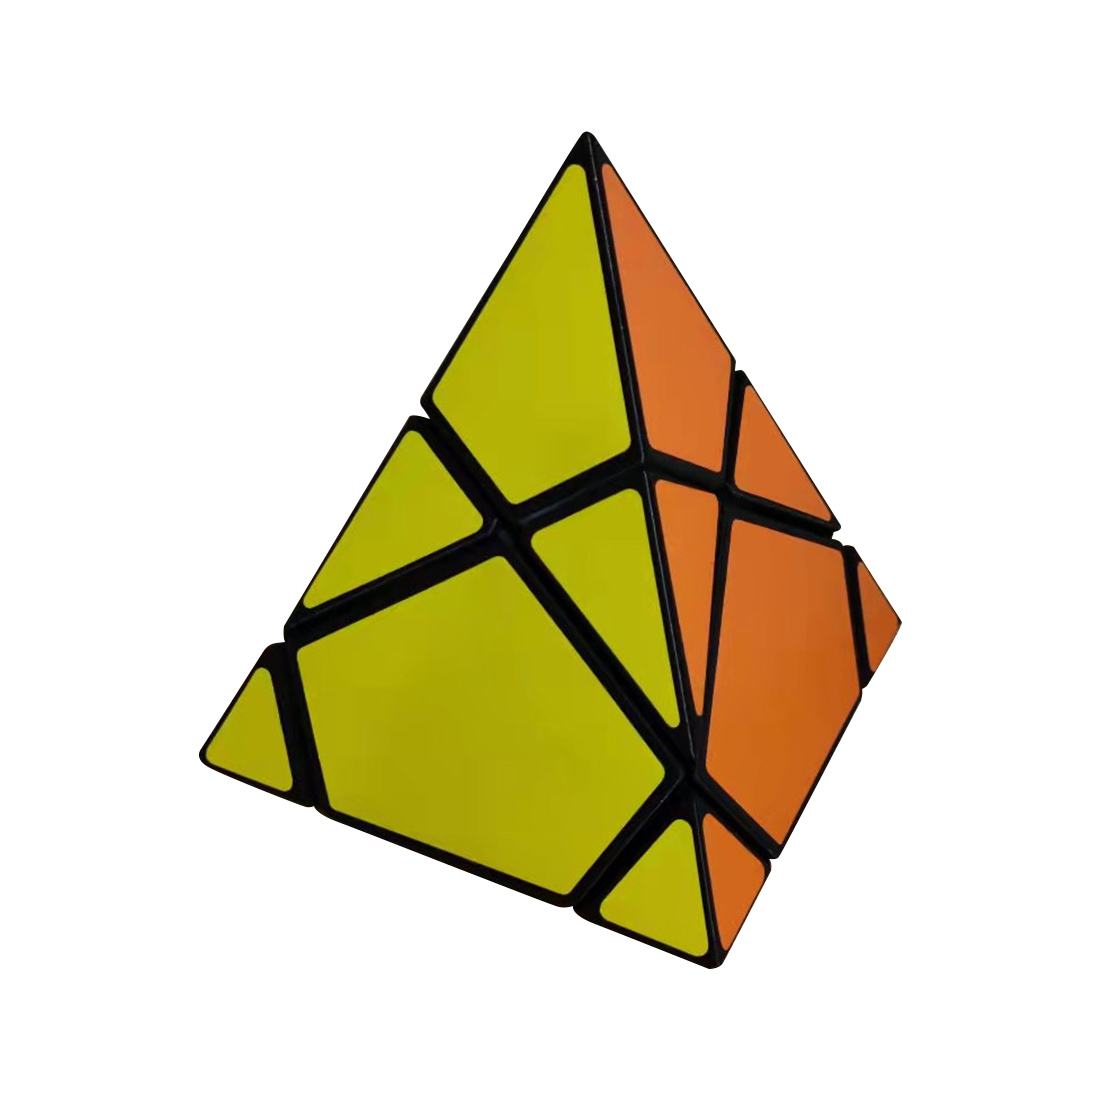 3x3 Pentahedron Pyramid Tower Cube